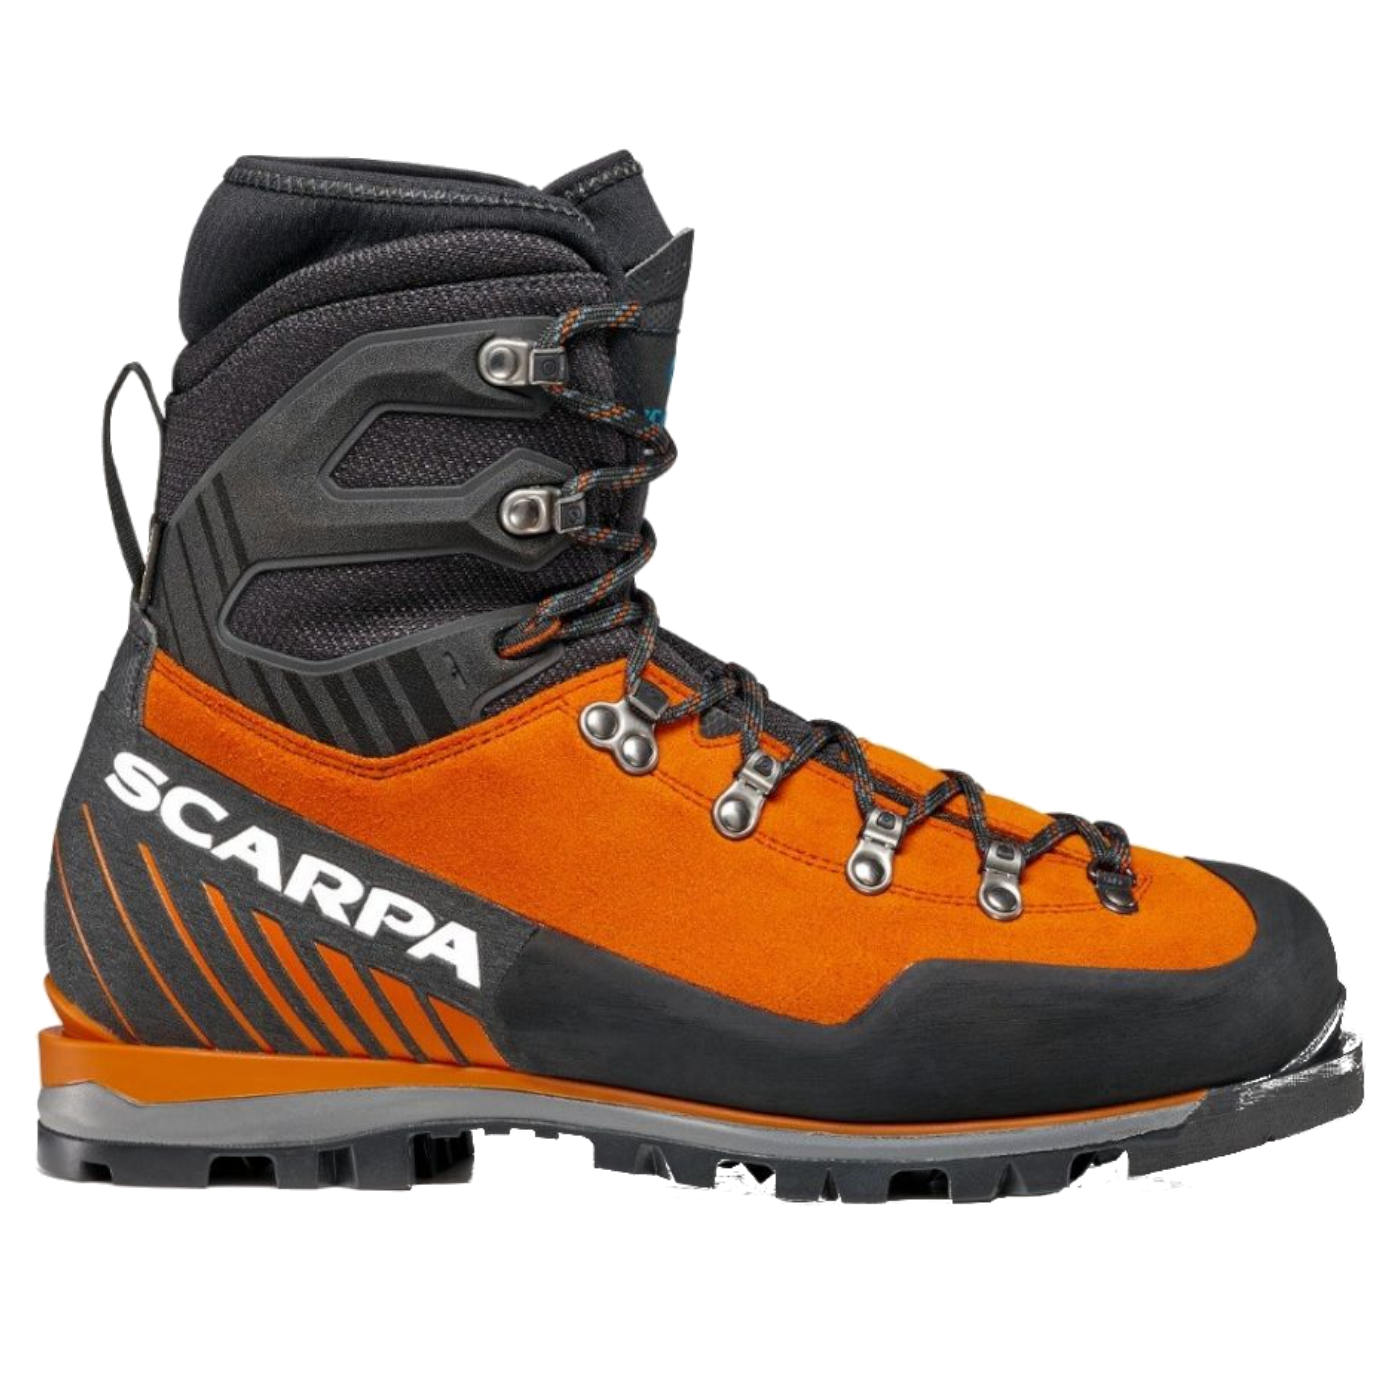 Scarpa Mont Blanc Pro GTX Size 42 Mountaineering Boot